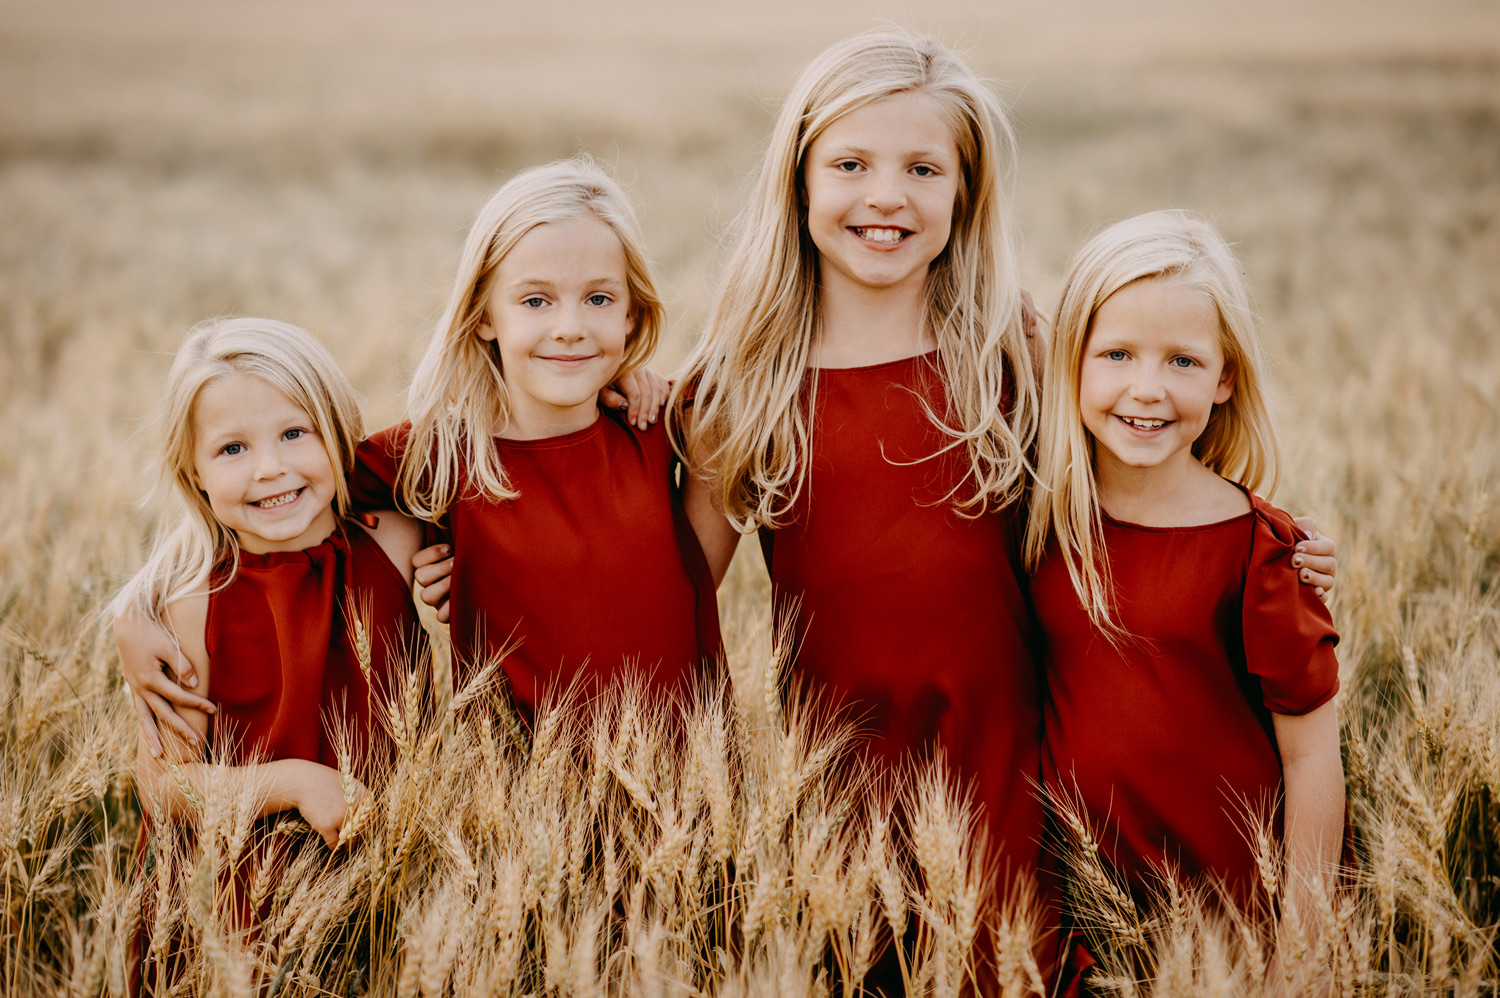 Fall-Farm-Wheat Field-Family Portraits